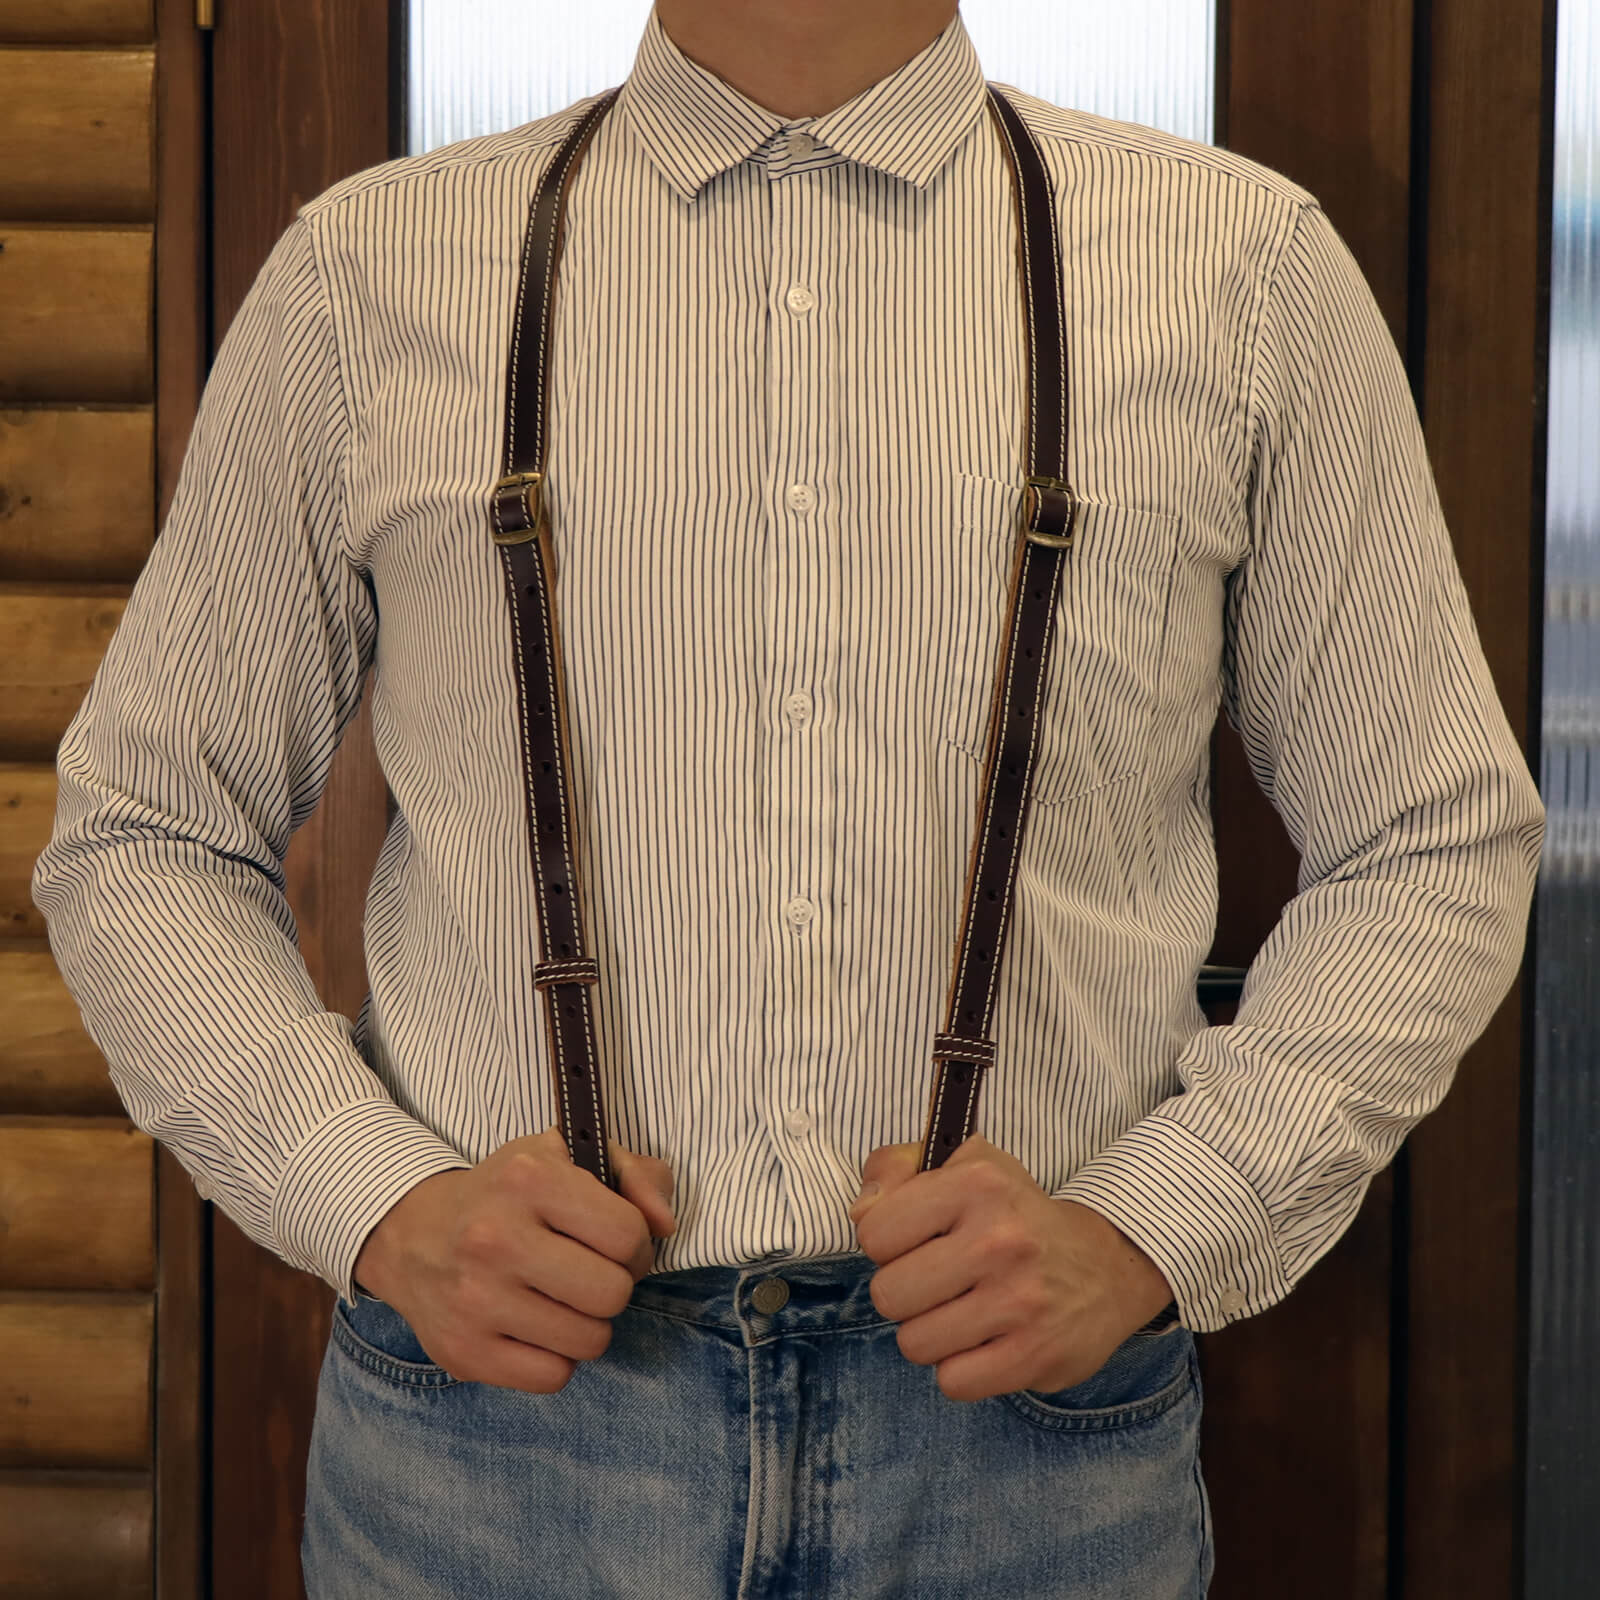 Tourbon Genuine Leather Men's Suspenders Heavy Duty Y Back Design